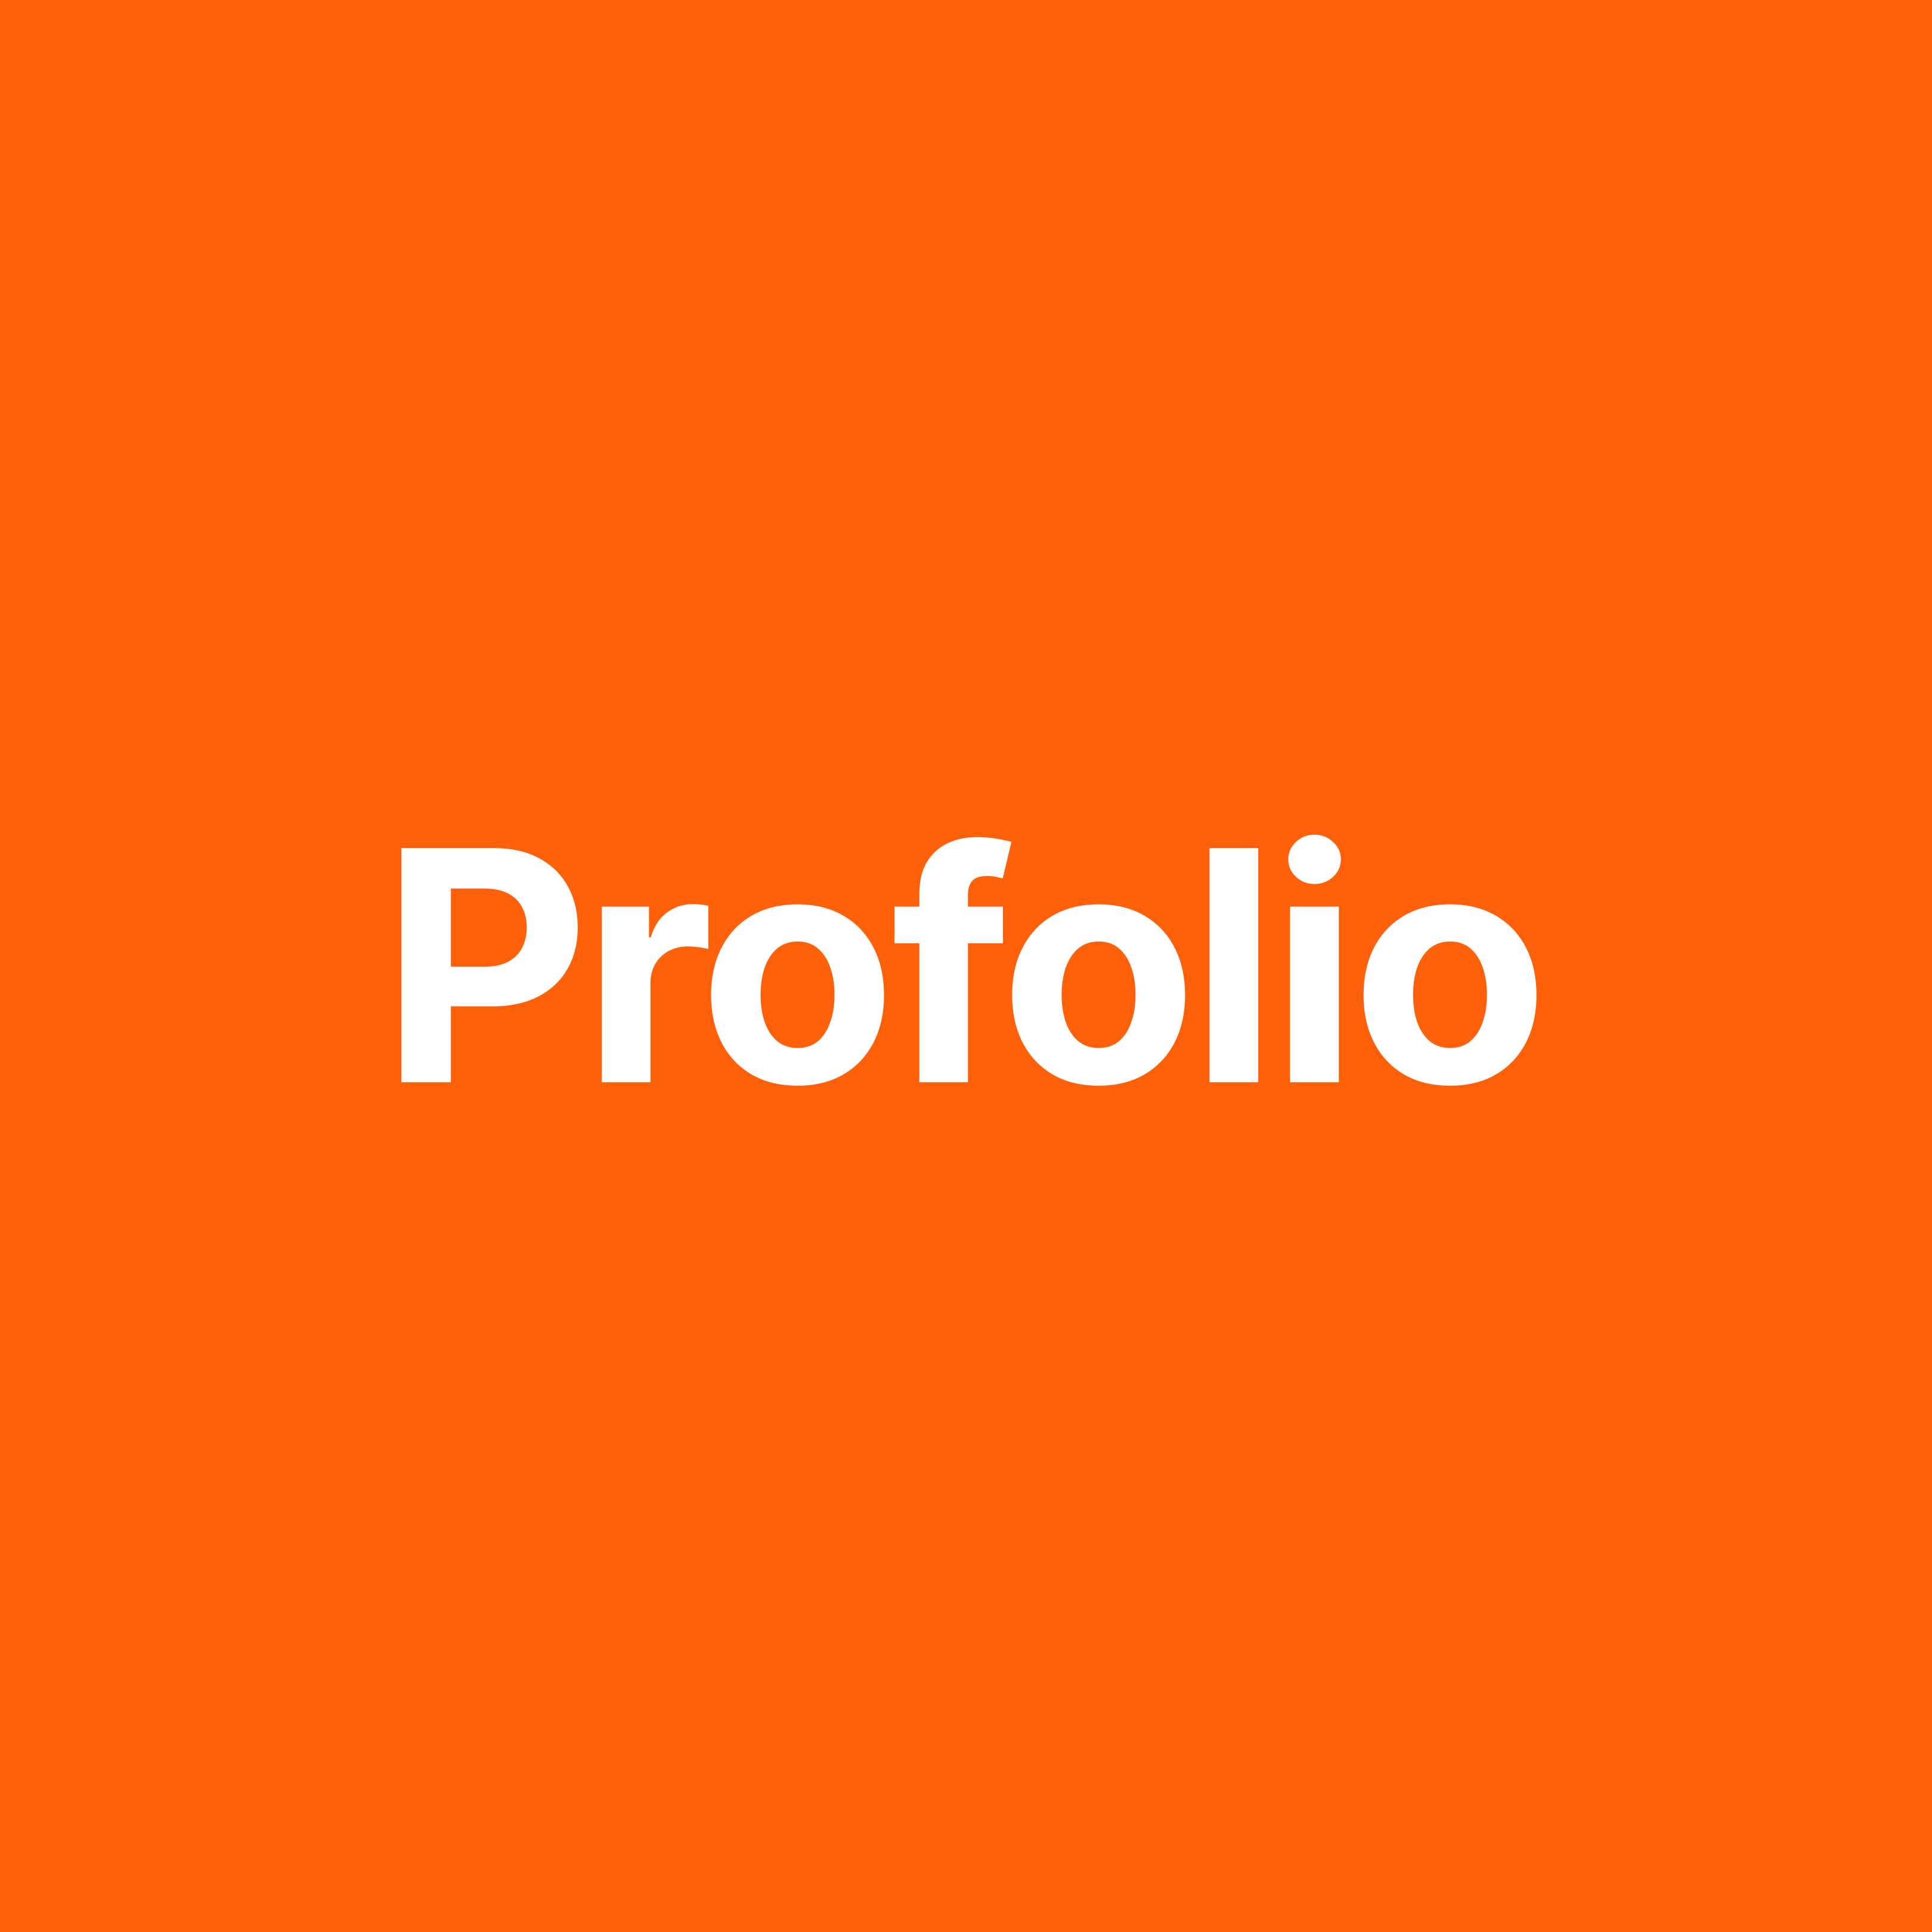 Profolio logo